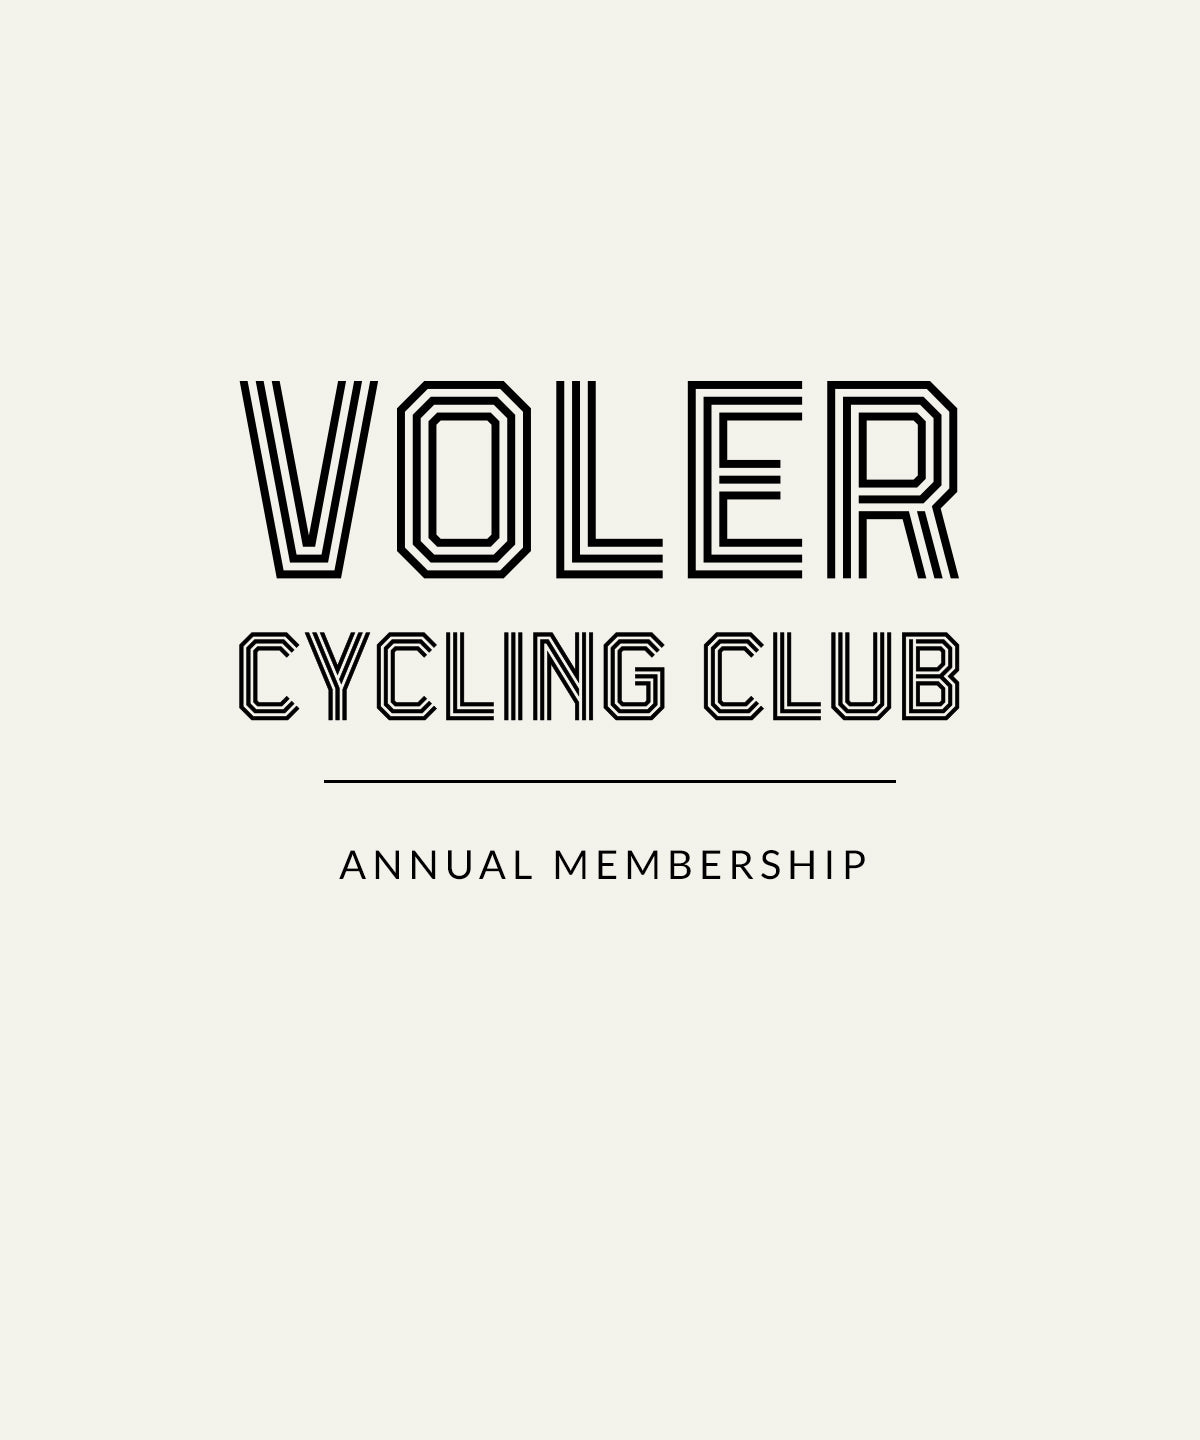 VOLER CYCLING CLUB ANNUAL MEMBERSHIP - CHAPTER MEMBERS